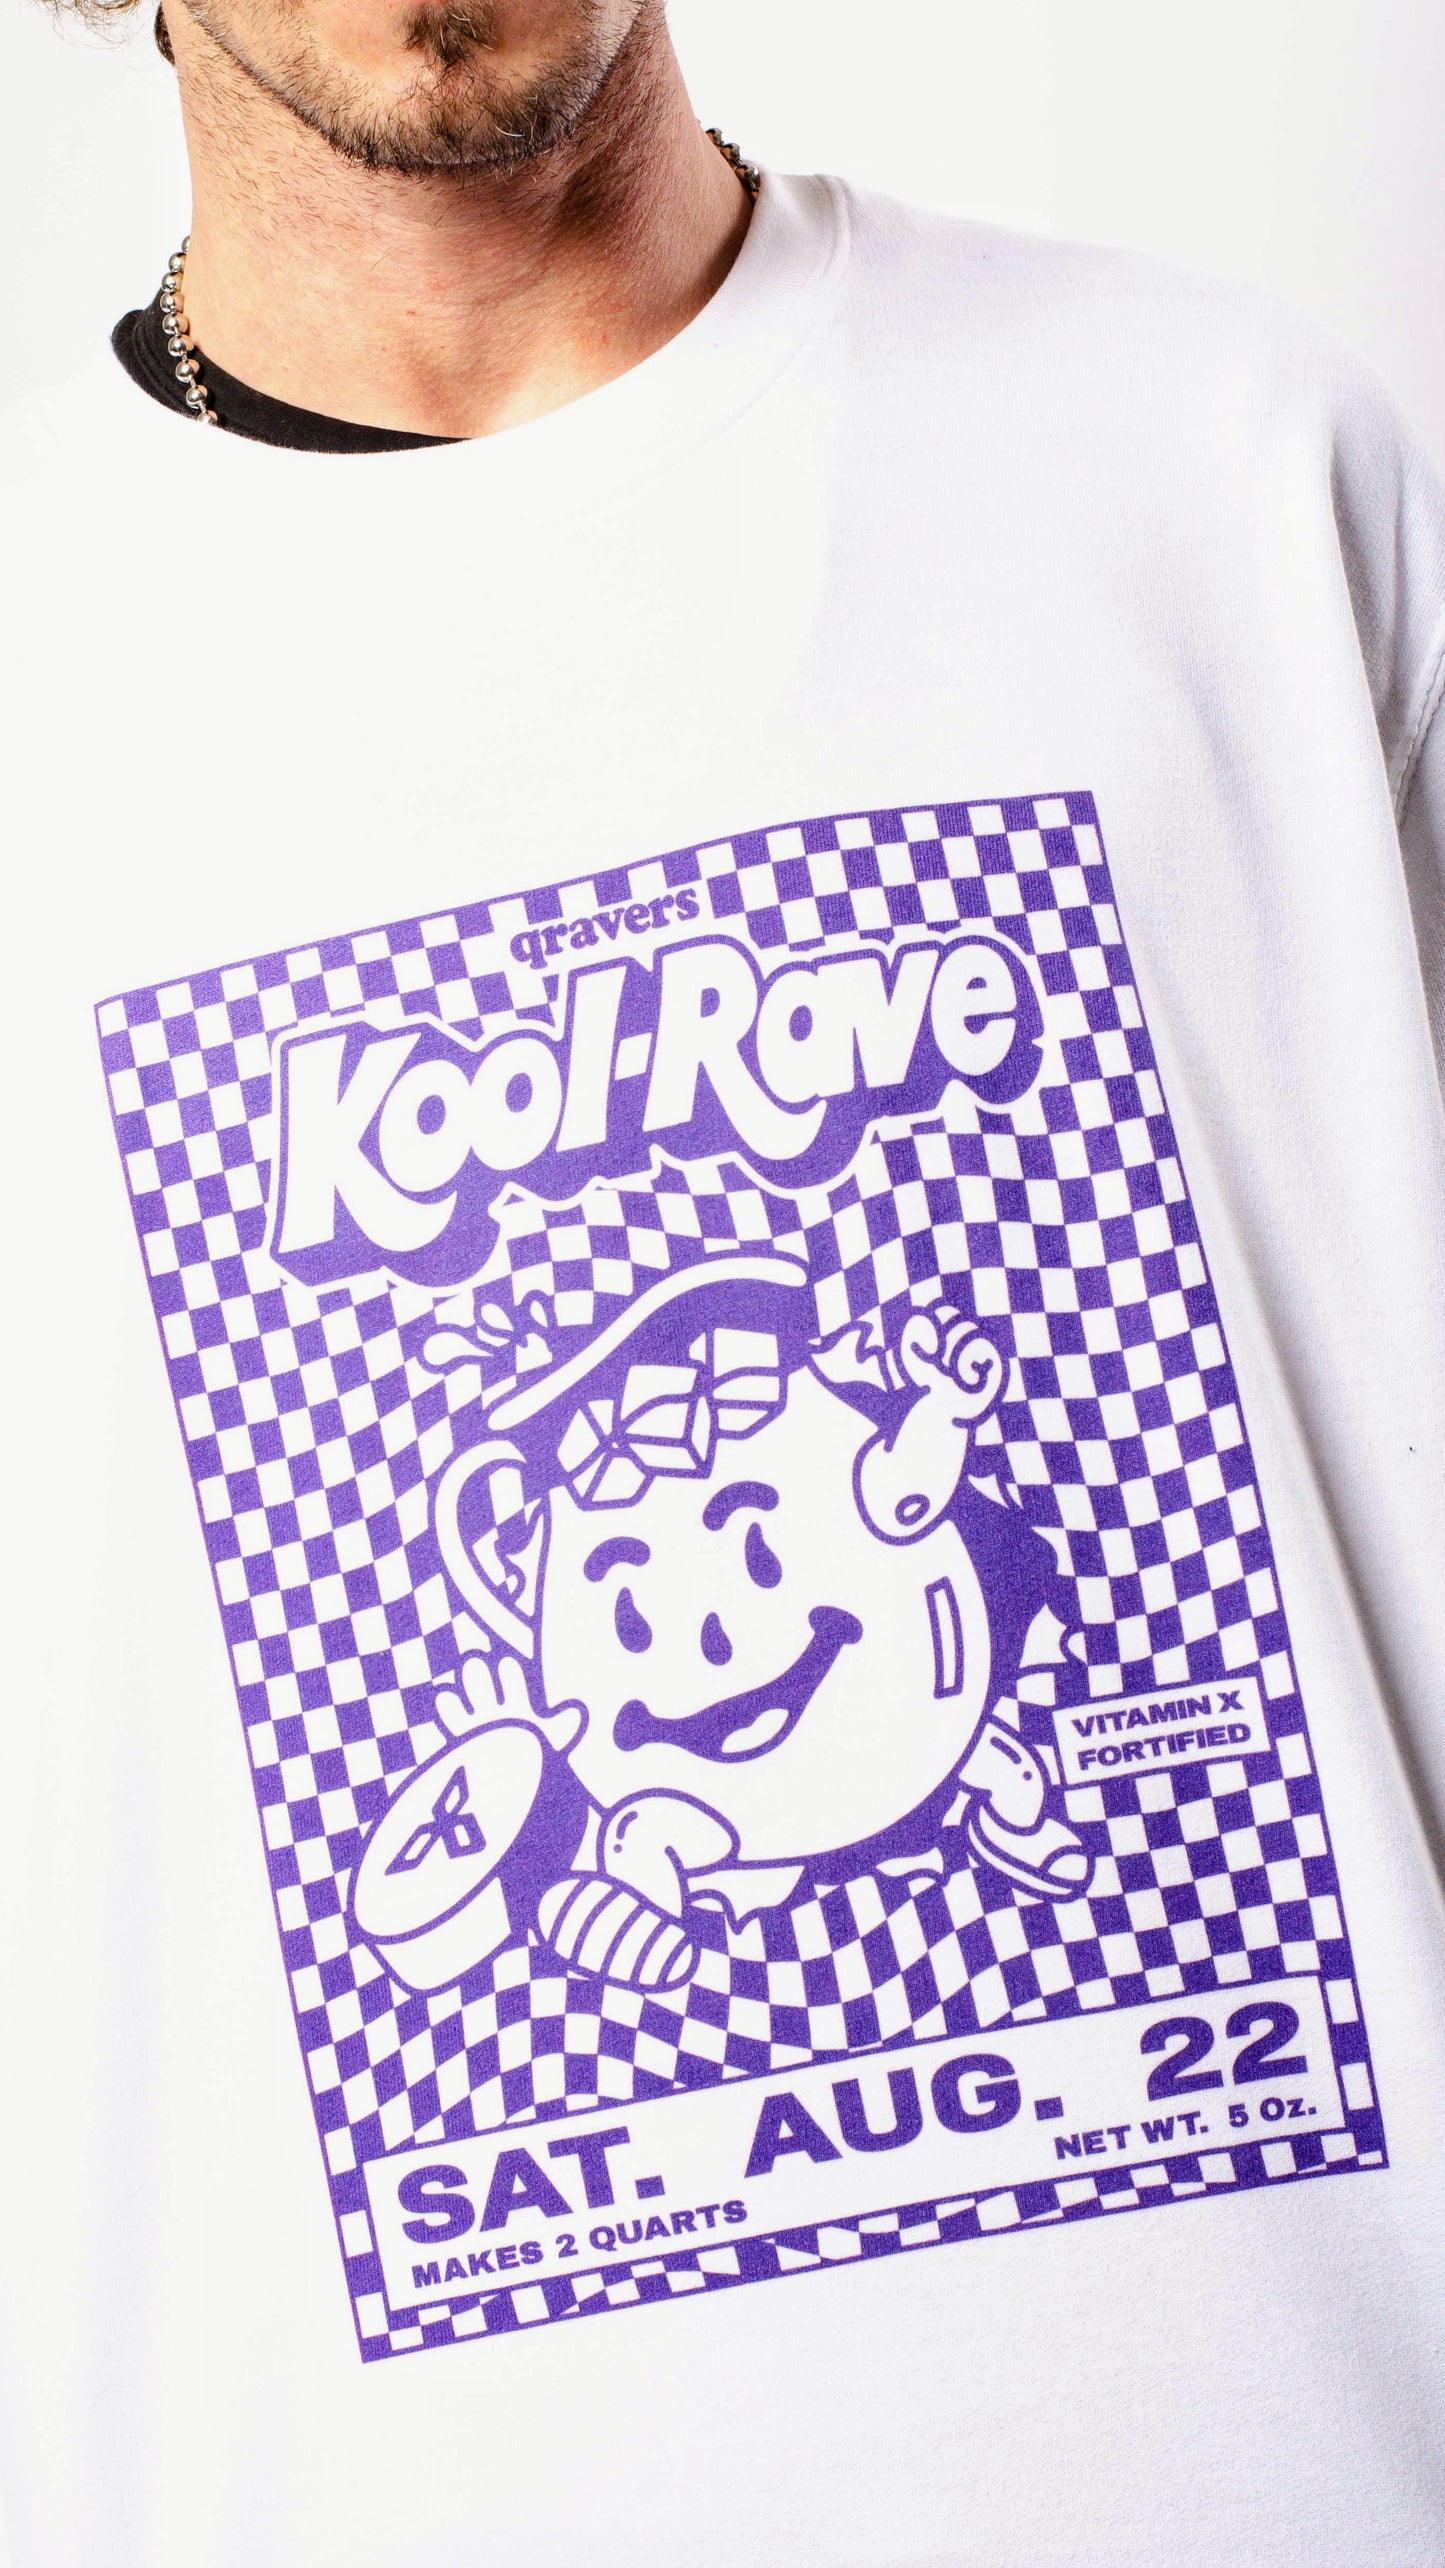 Kool-Rave Sweat White